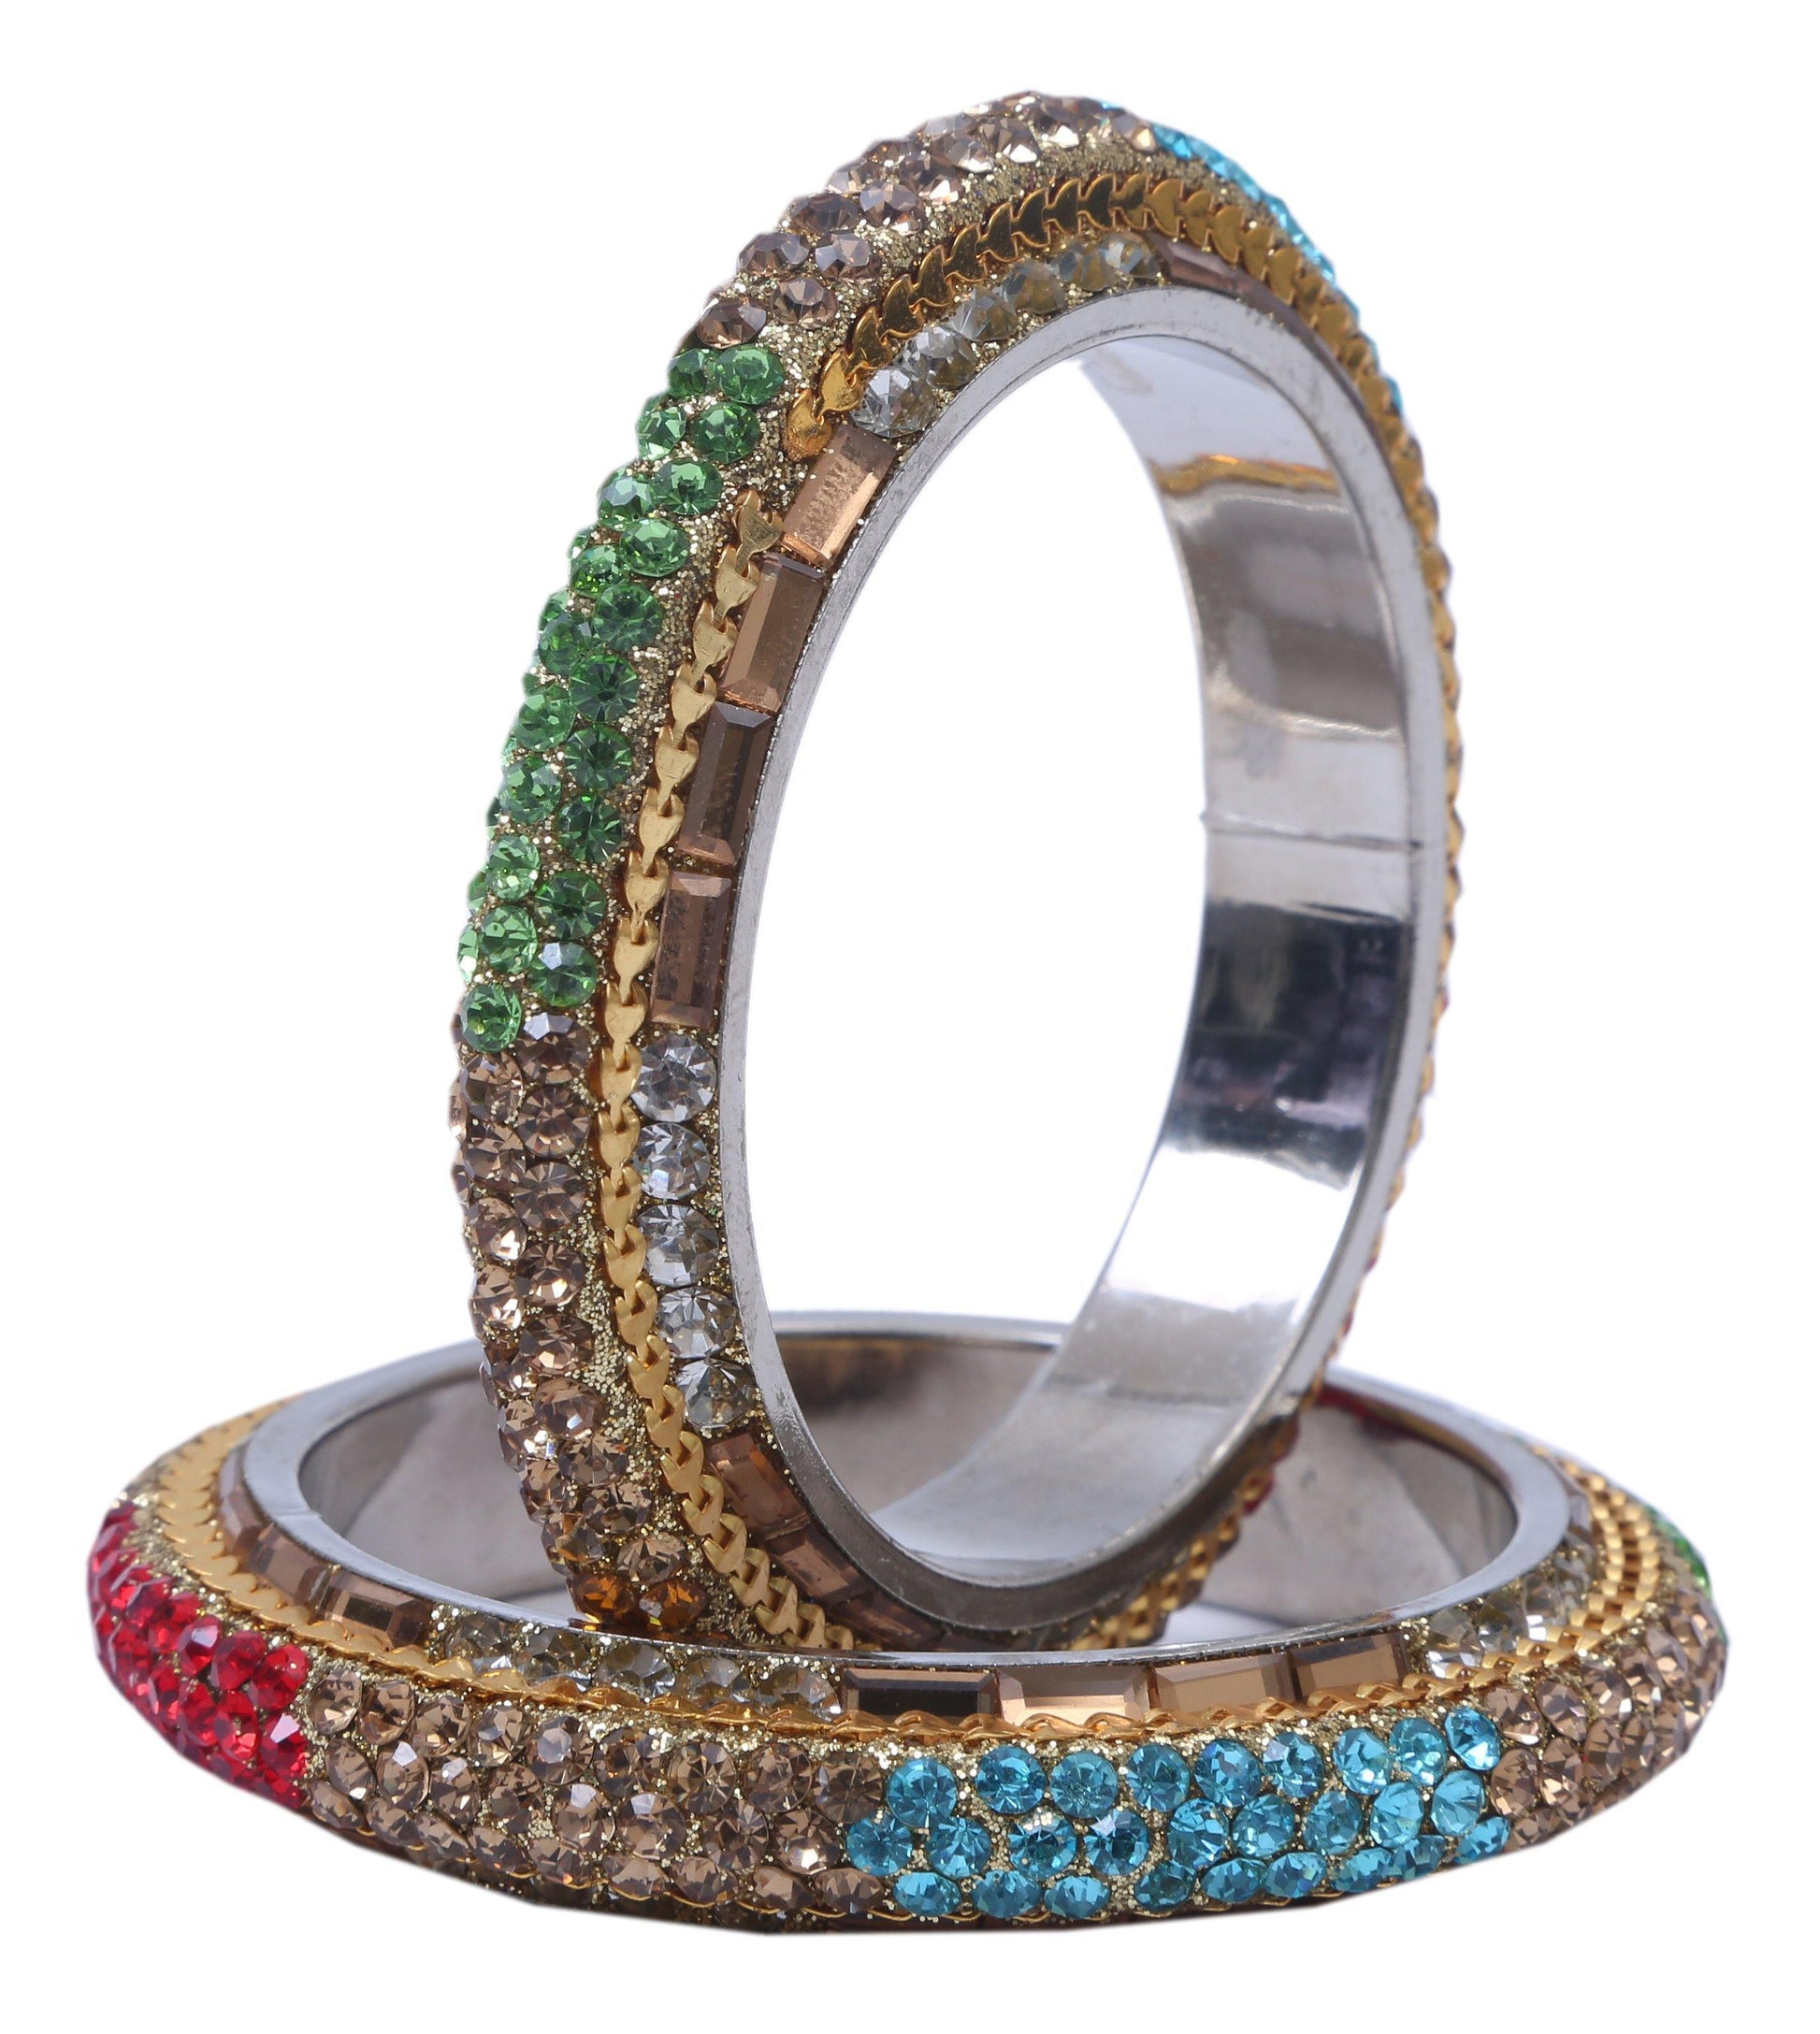 sukriti traditional stylish party-wear multi color brass bangles bracelet for women & girls - set of 2